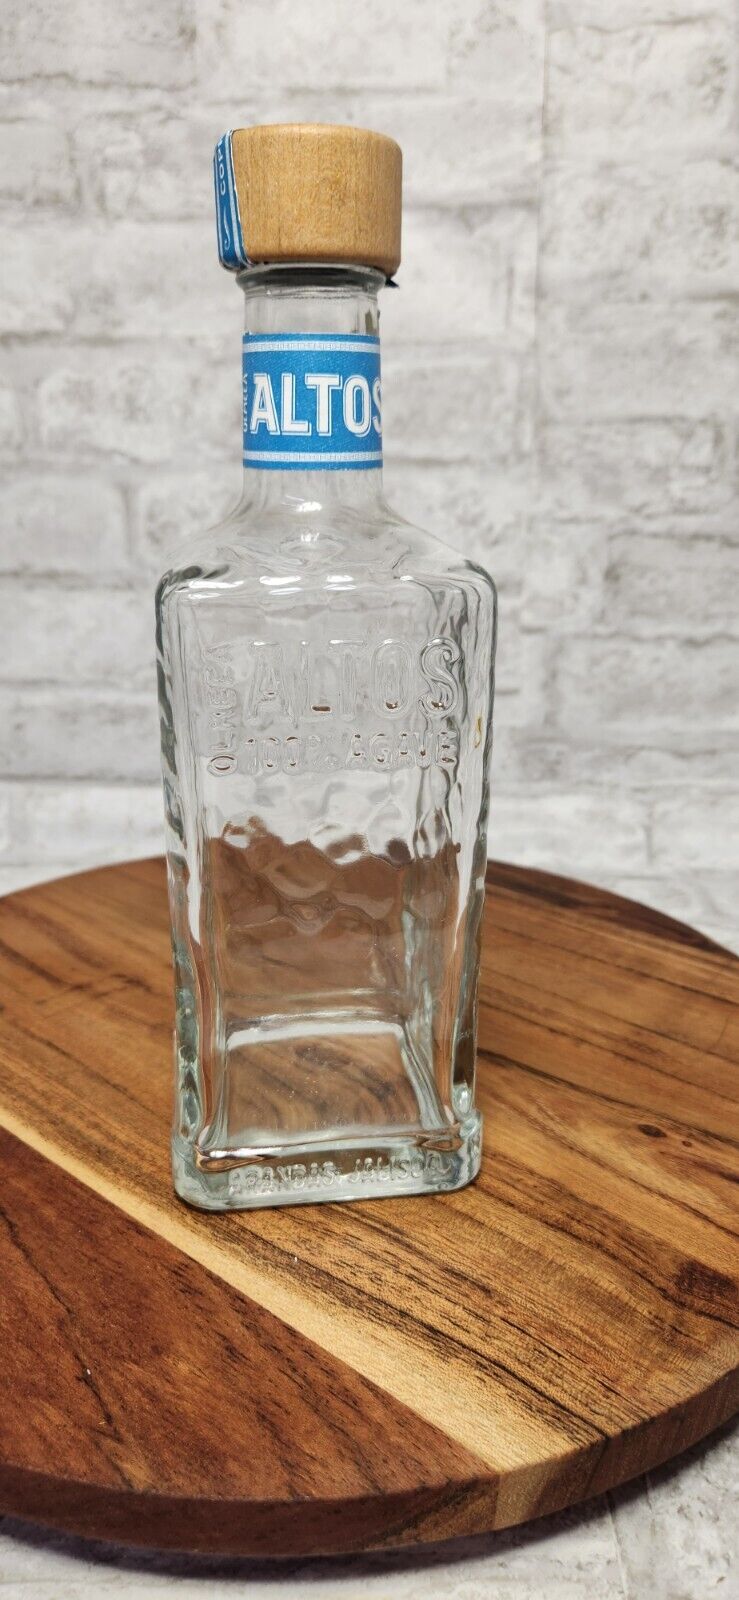 OLMECA ALTOS PLATA Tequila Bottle 750ml 100% Agave Empty Glass Liquor Mexico